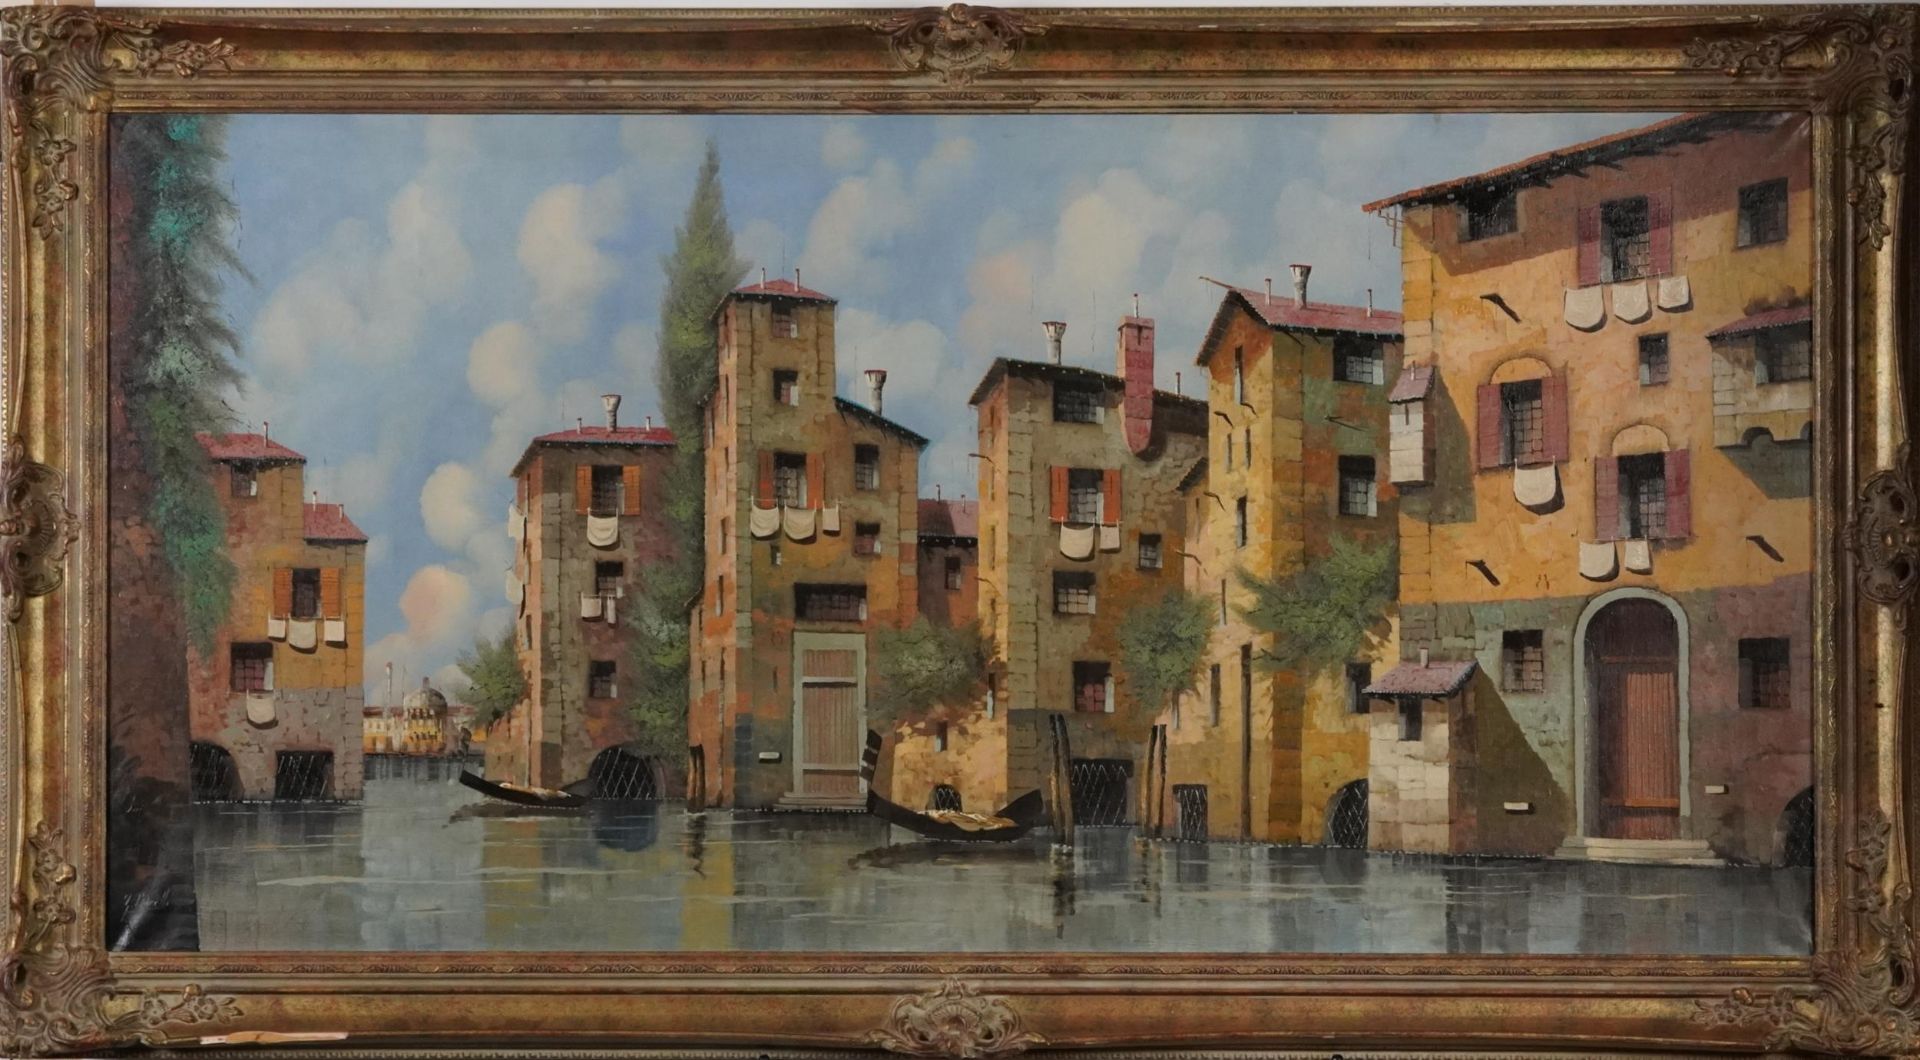 Guido Borelli - Venice with gondolas, Italian Impressionist oil on canvas, framed, 120cm x 60cm - Image 2 of 5